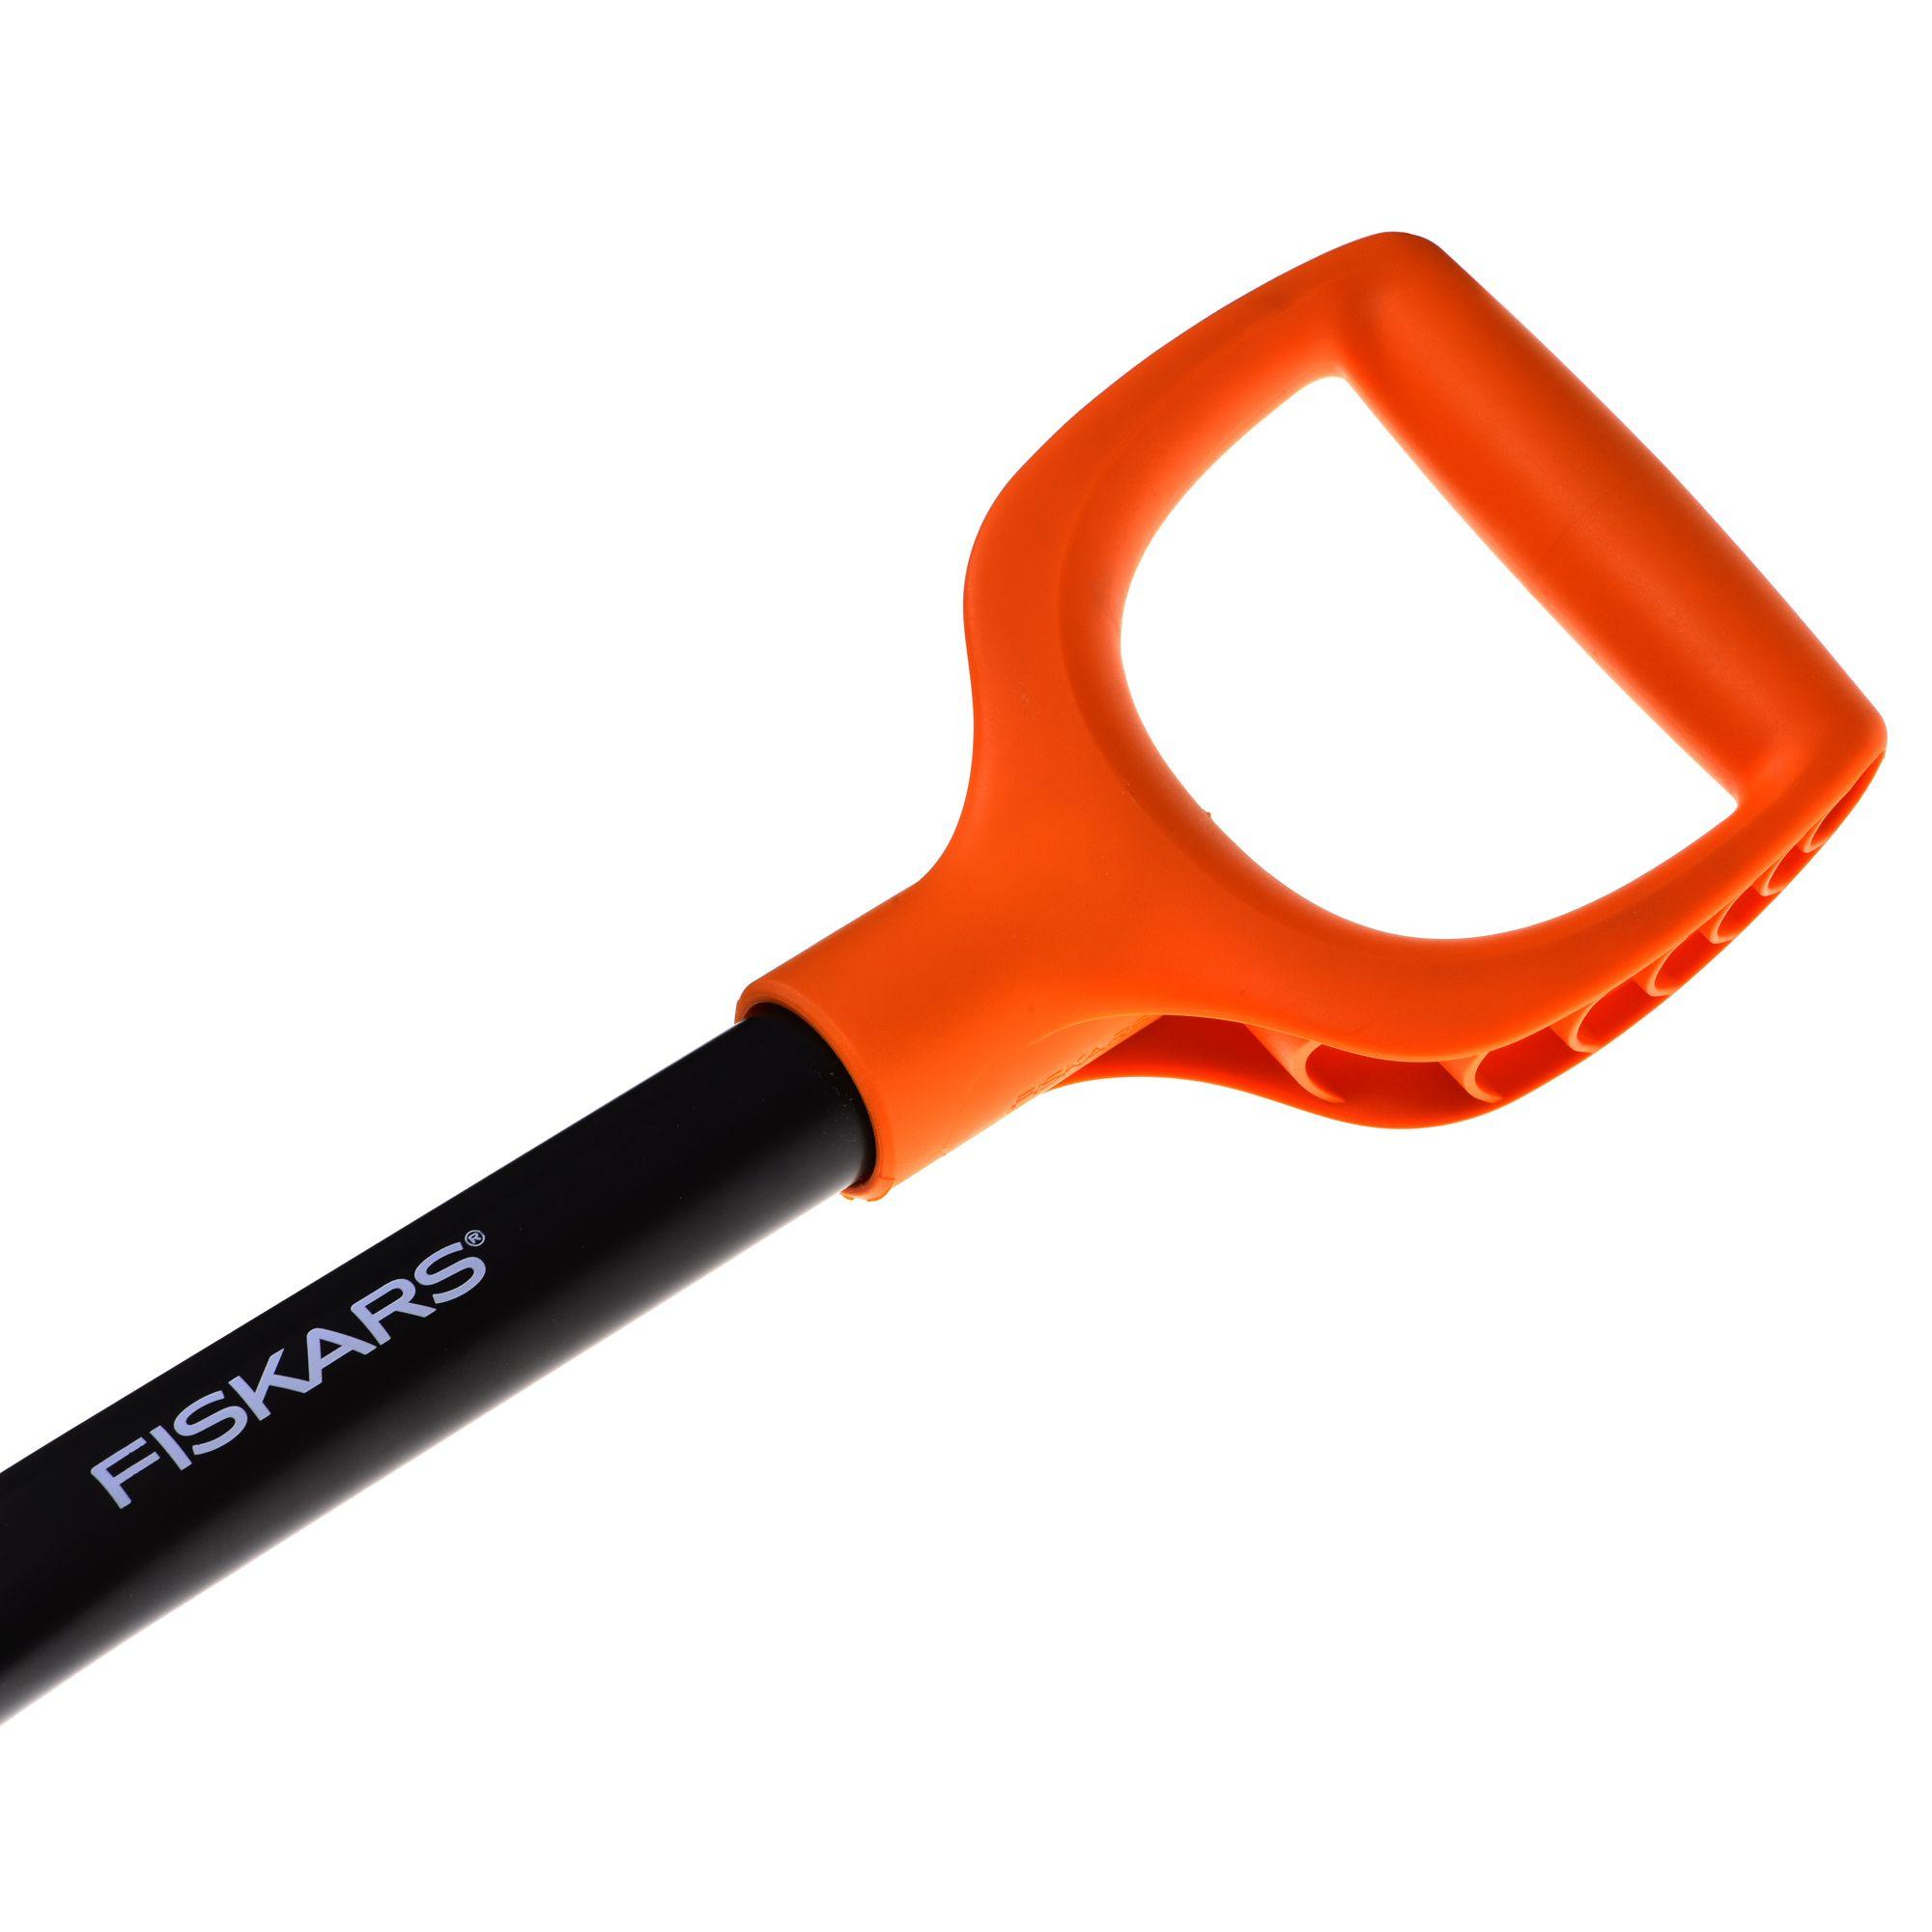 Fiskars 1014809 shovel/trowel Garden trowel Plastic,Steel Black,Orange